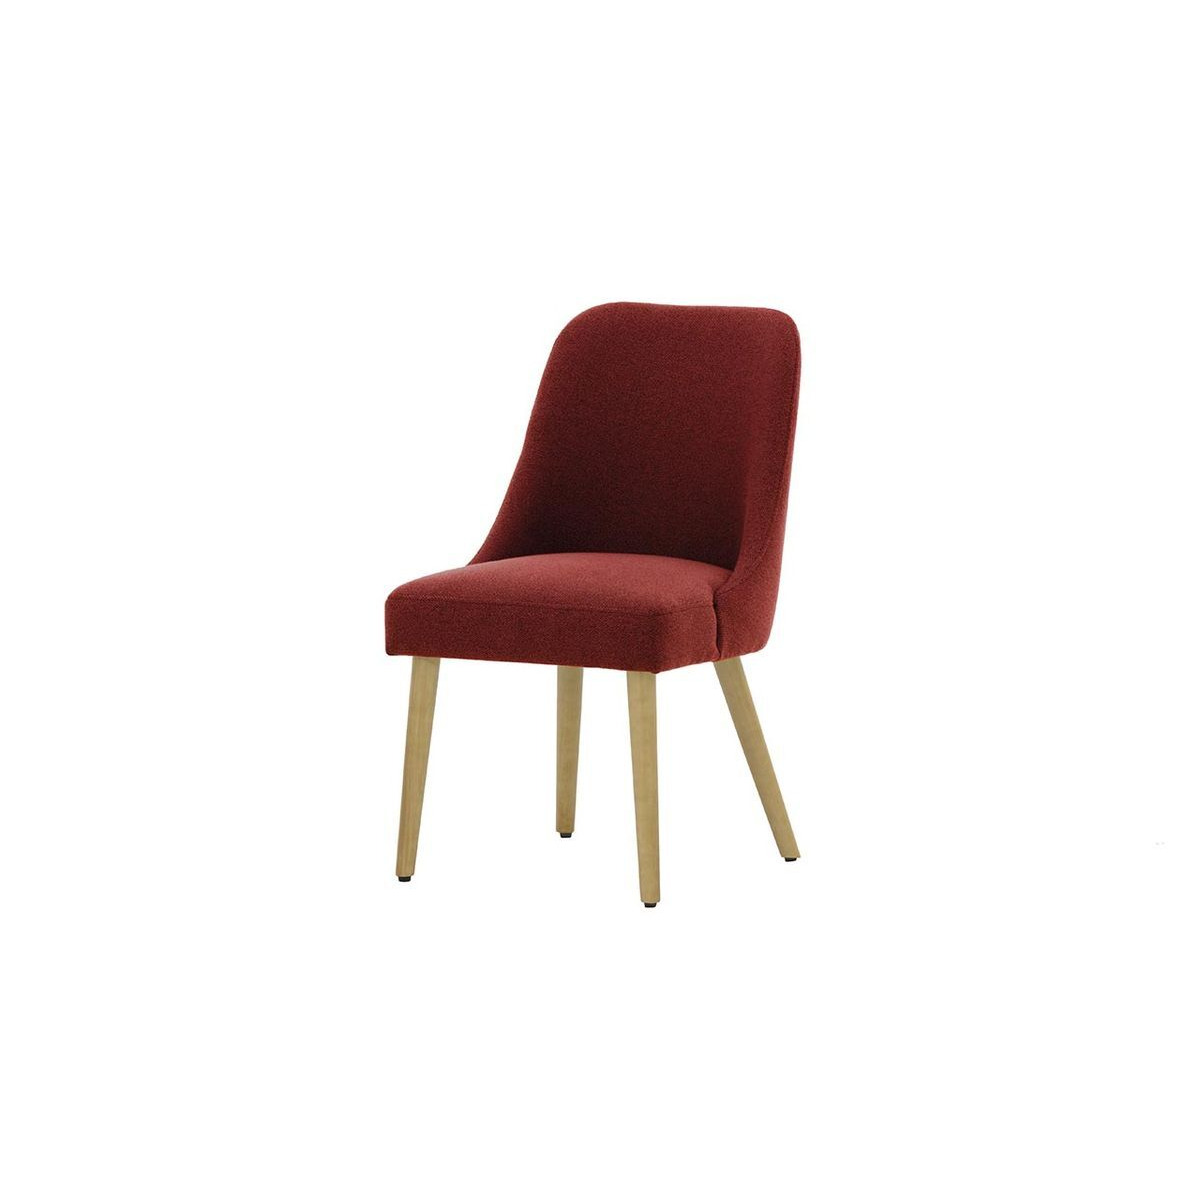 Albion Dining Chair, burgundy, Leg colour: like oak - image 1